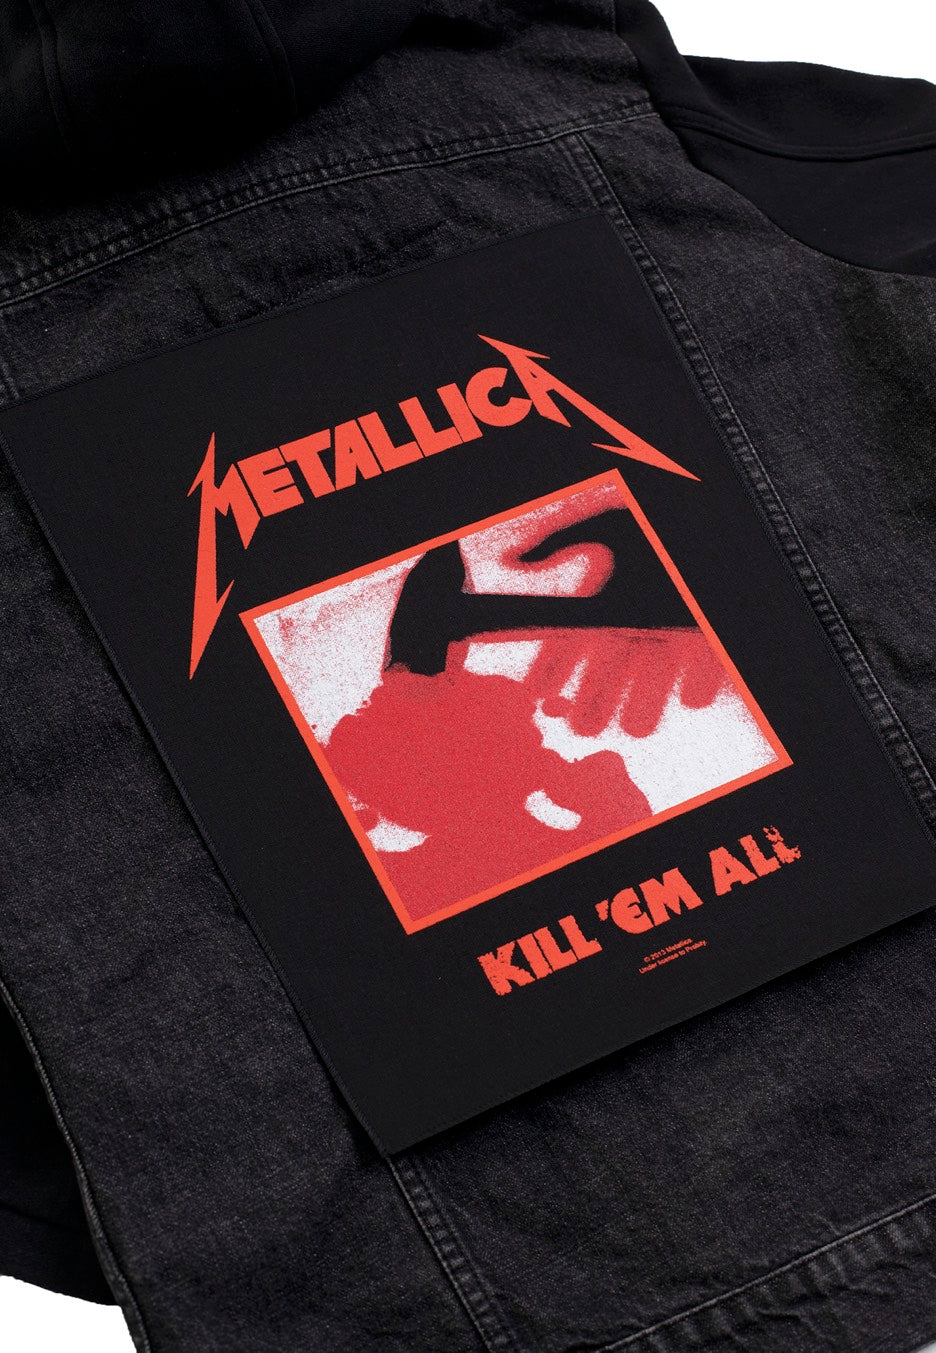 Metallica - Kill 'Em All - Backpatch